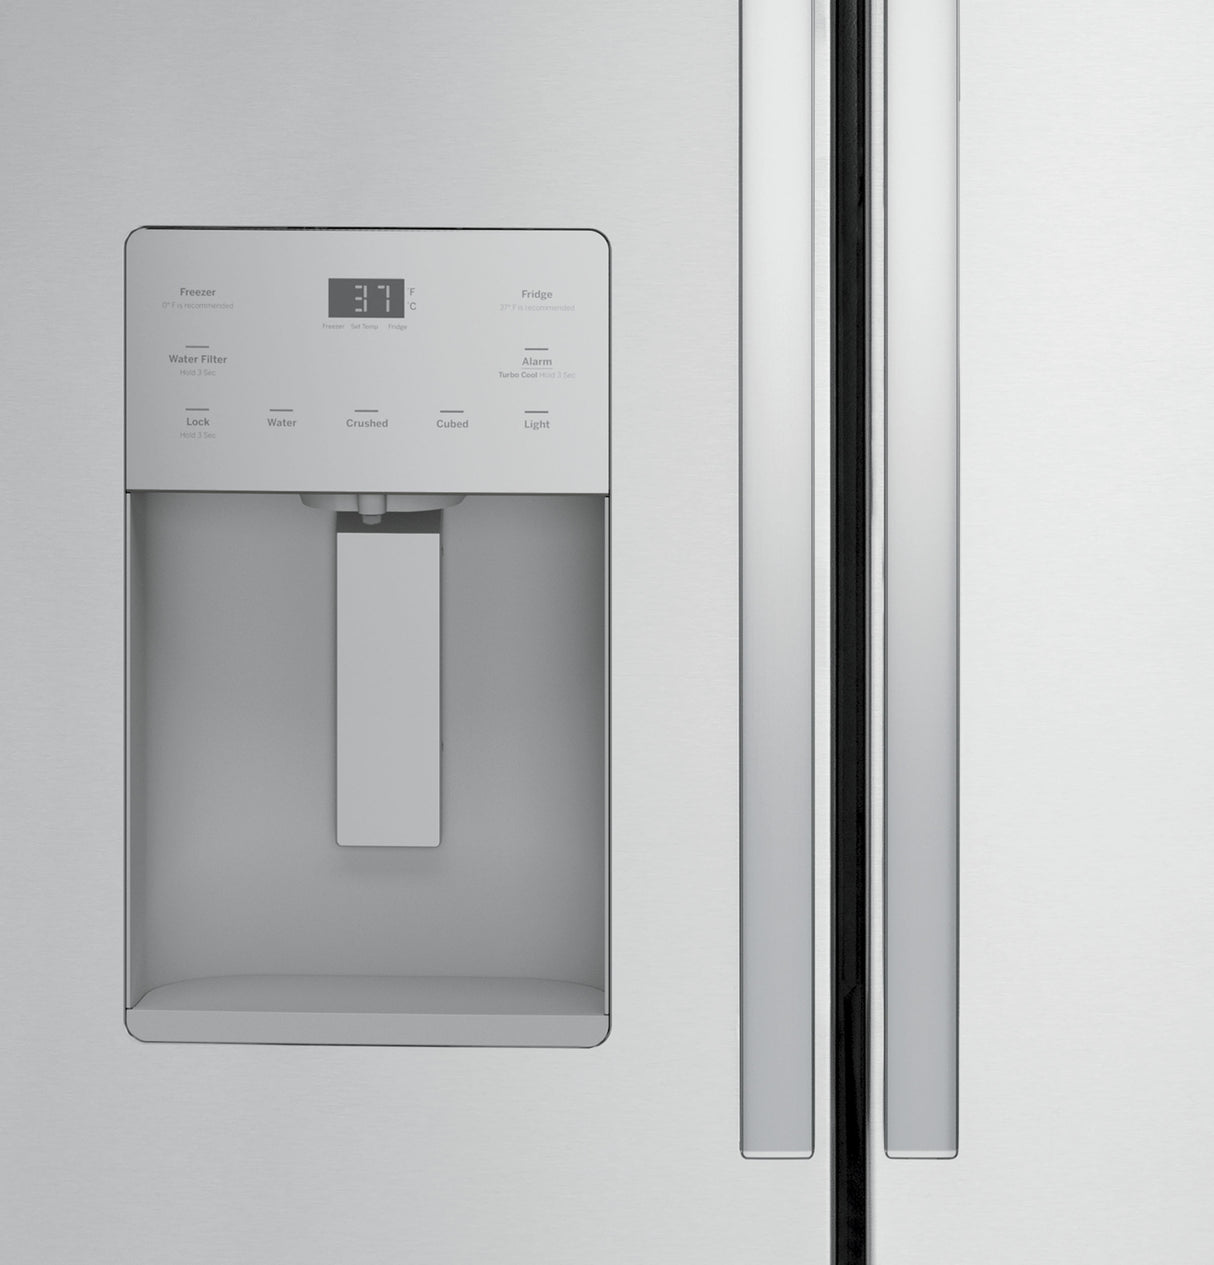 GE(R) ENERGY STAR(R) 25.7 Cu. Ft. Fingerprint Resistant French-Door Refrigerator - (GFE26JYMFS)